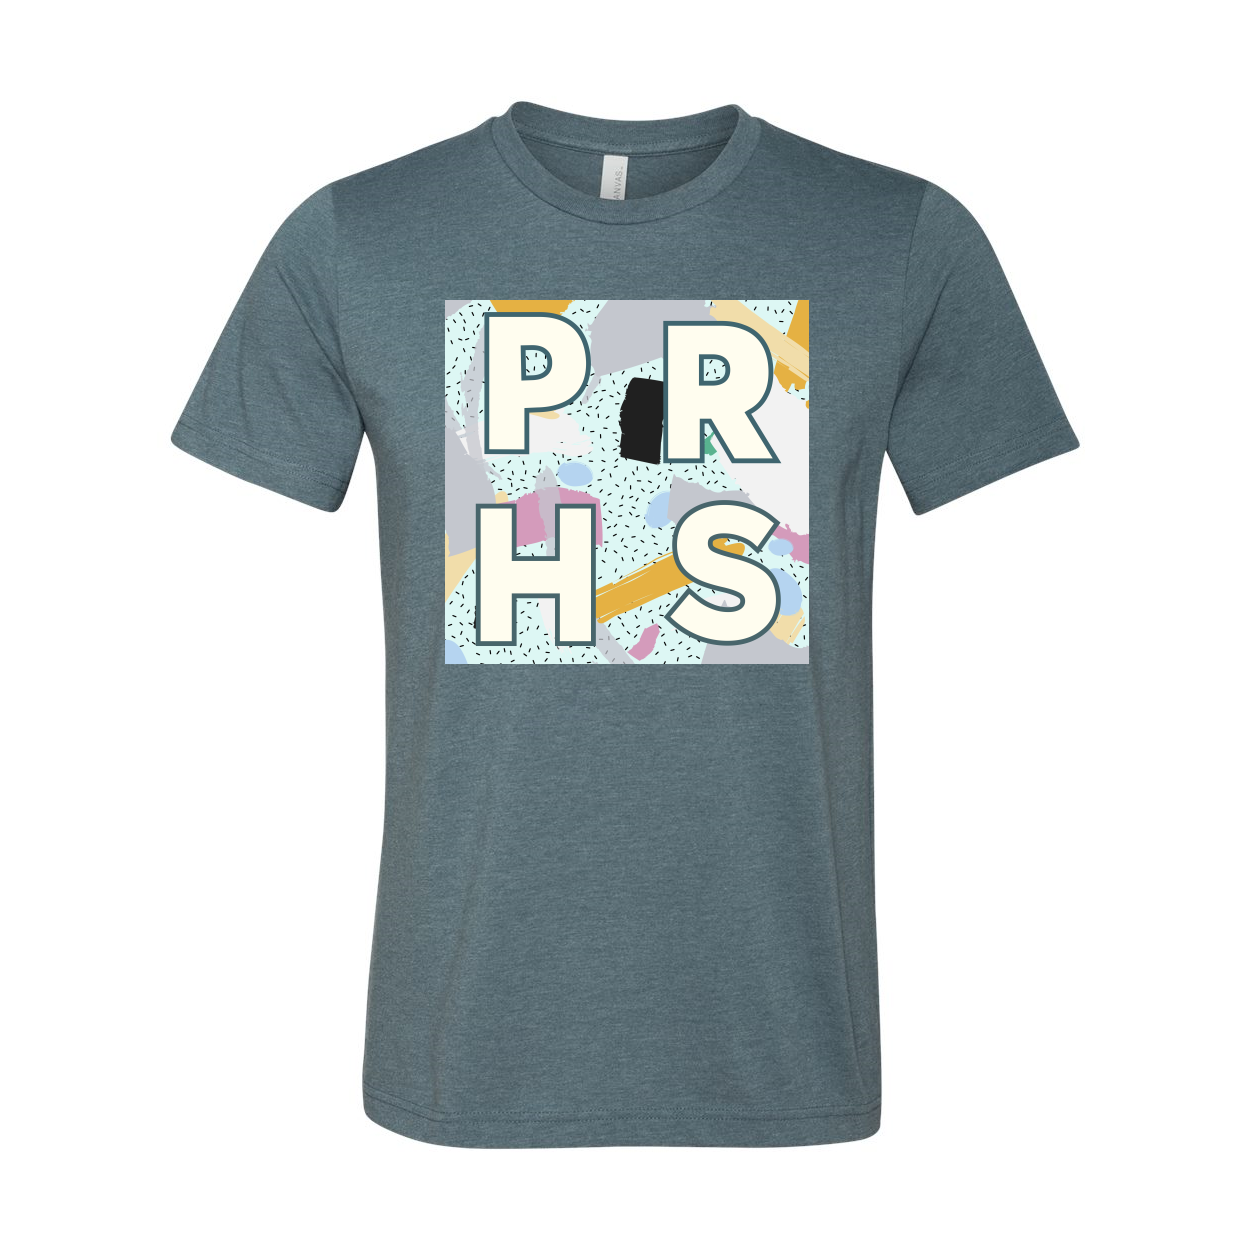 Pea Ridge PRHS Patterned T-Shirt